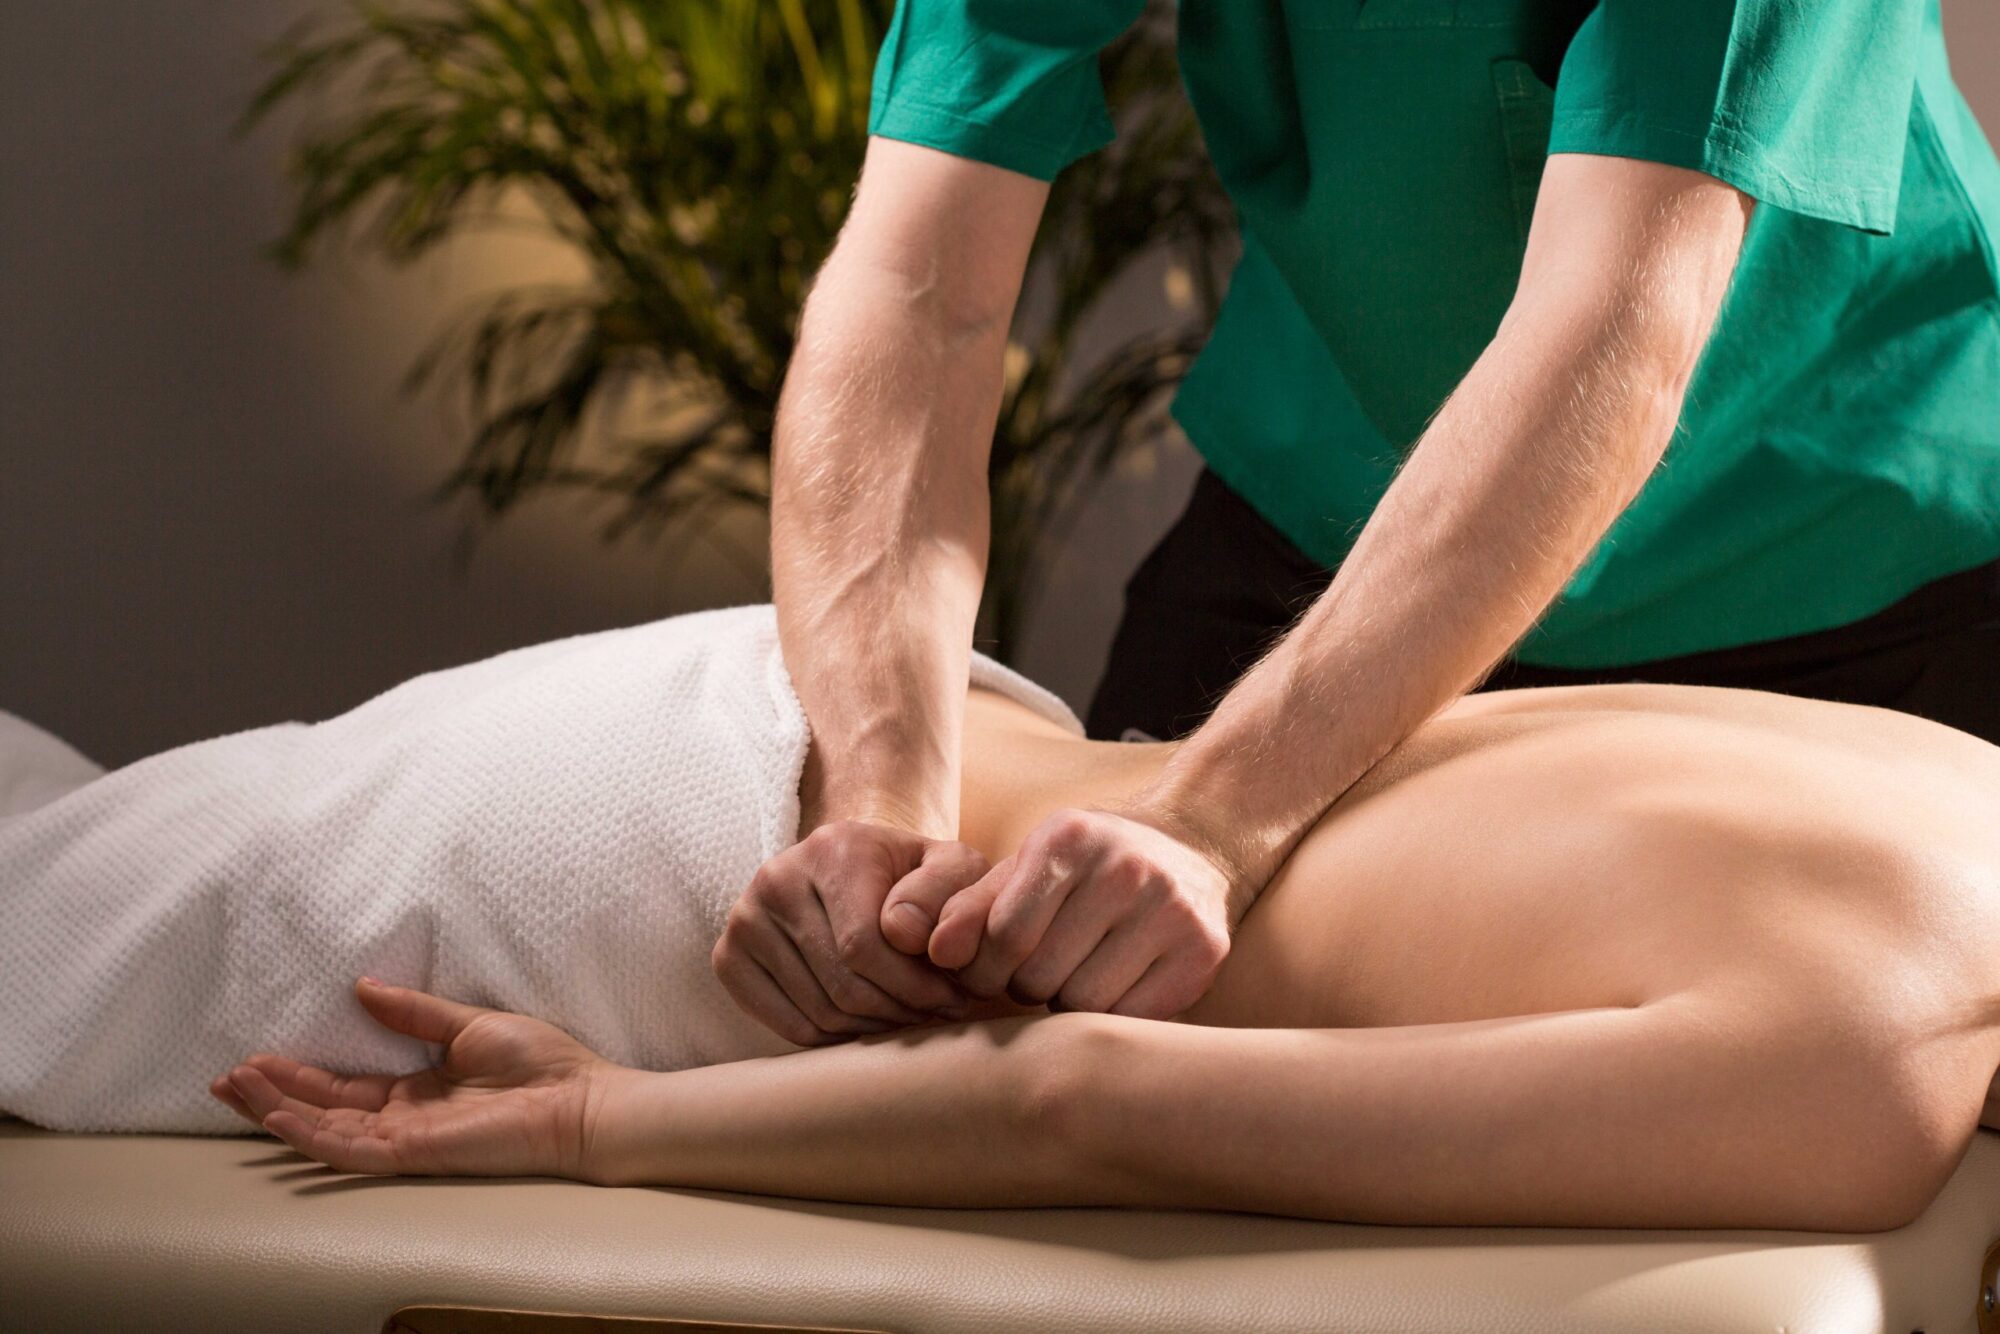 Matthew Clark providing a massage treatment to a patient